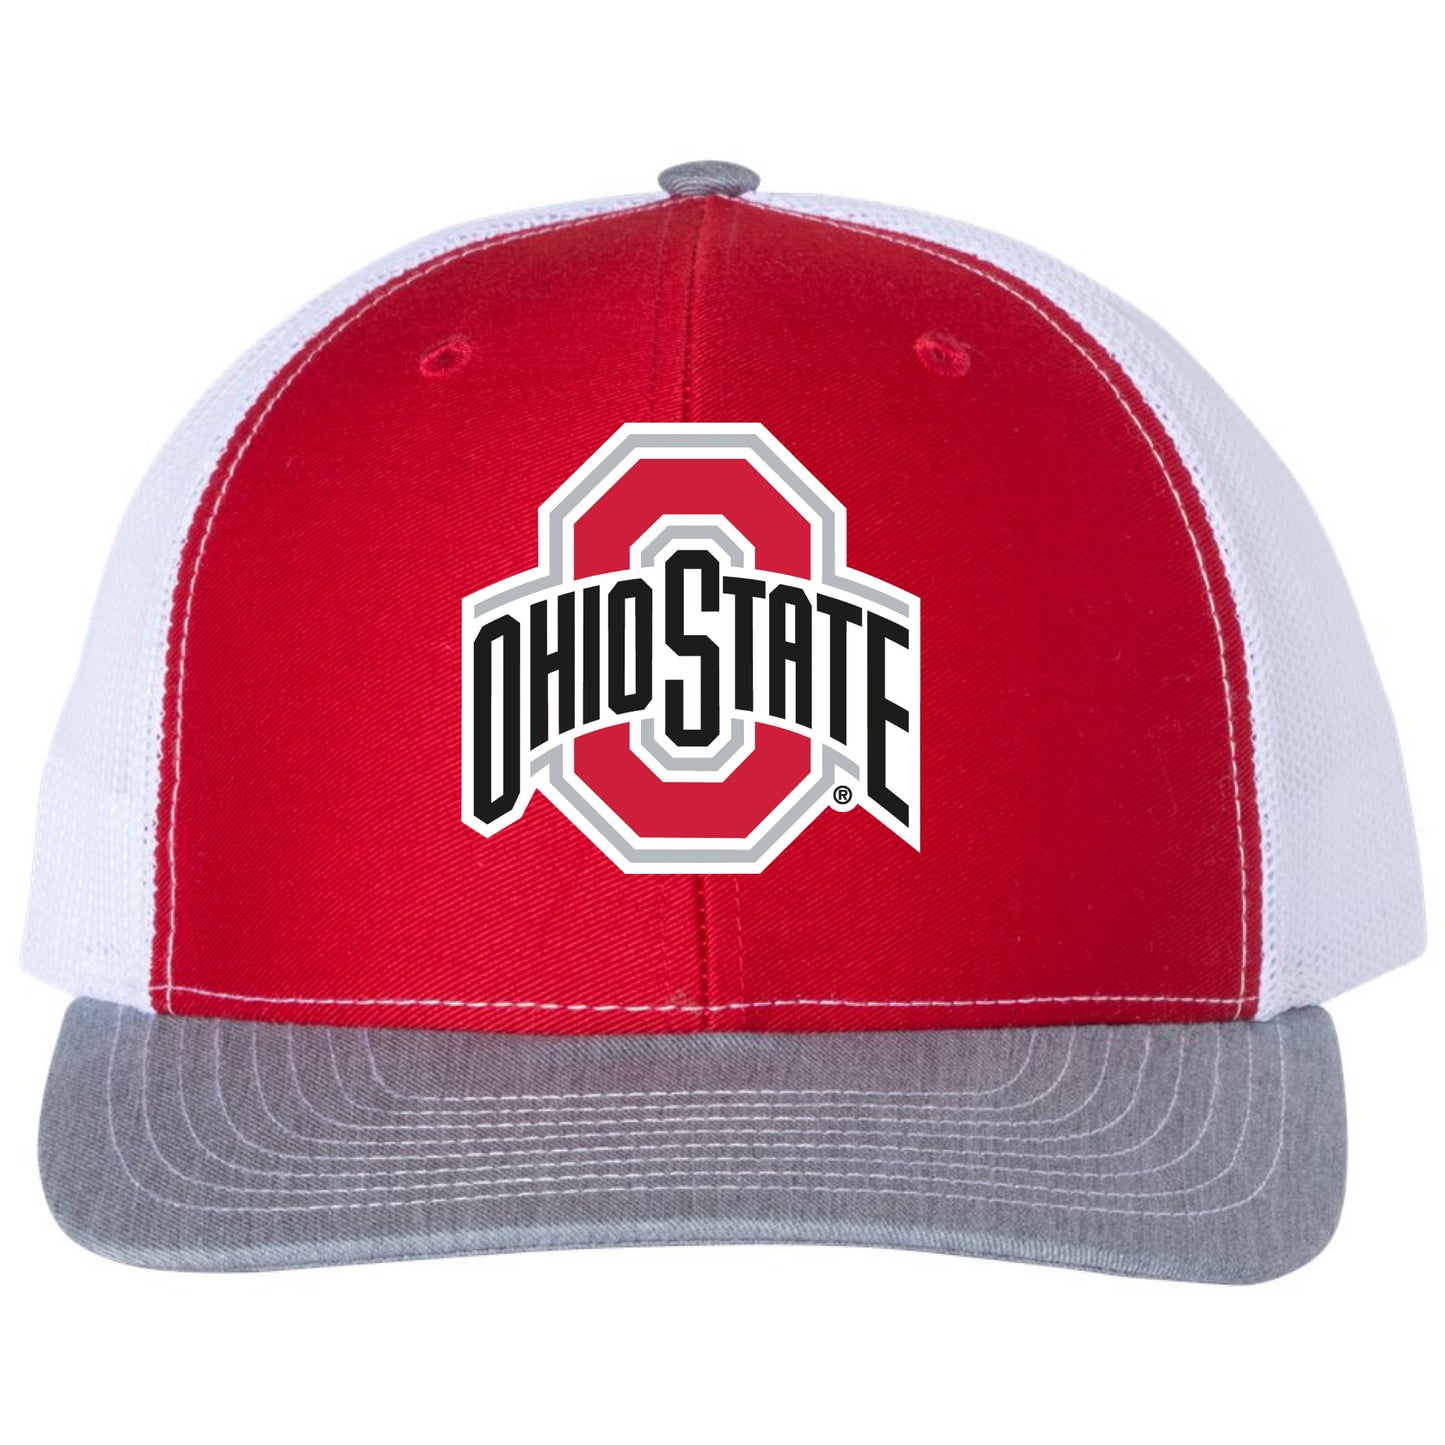 Ohio State Buckeyes 3D Snapback Trucker Hat- Red/ White/ Heather Grey - Ten Gallon Hat Co.